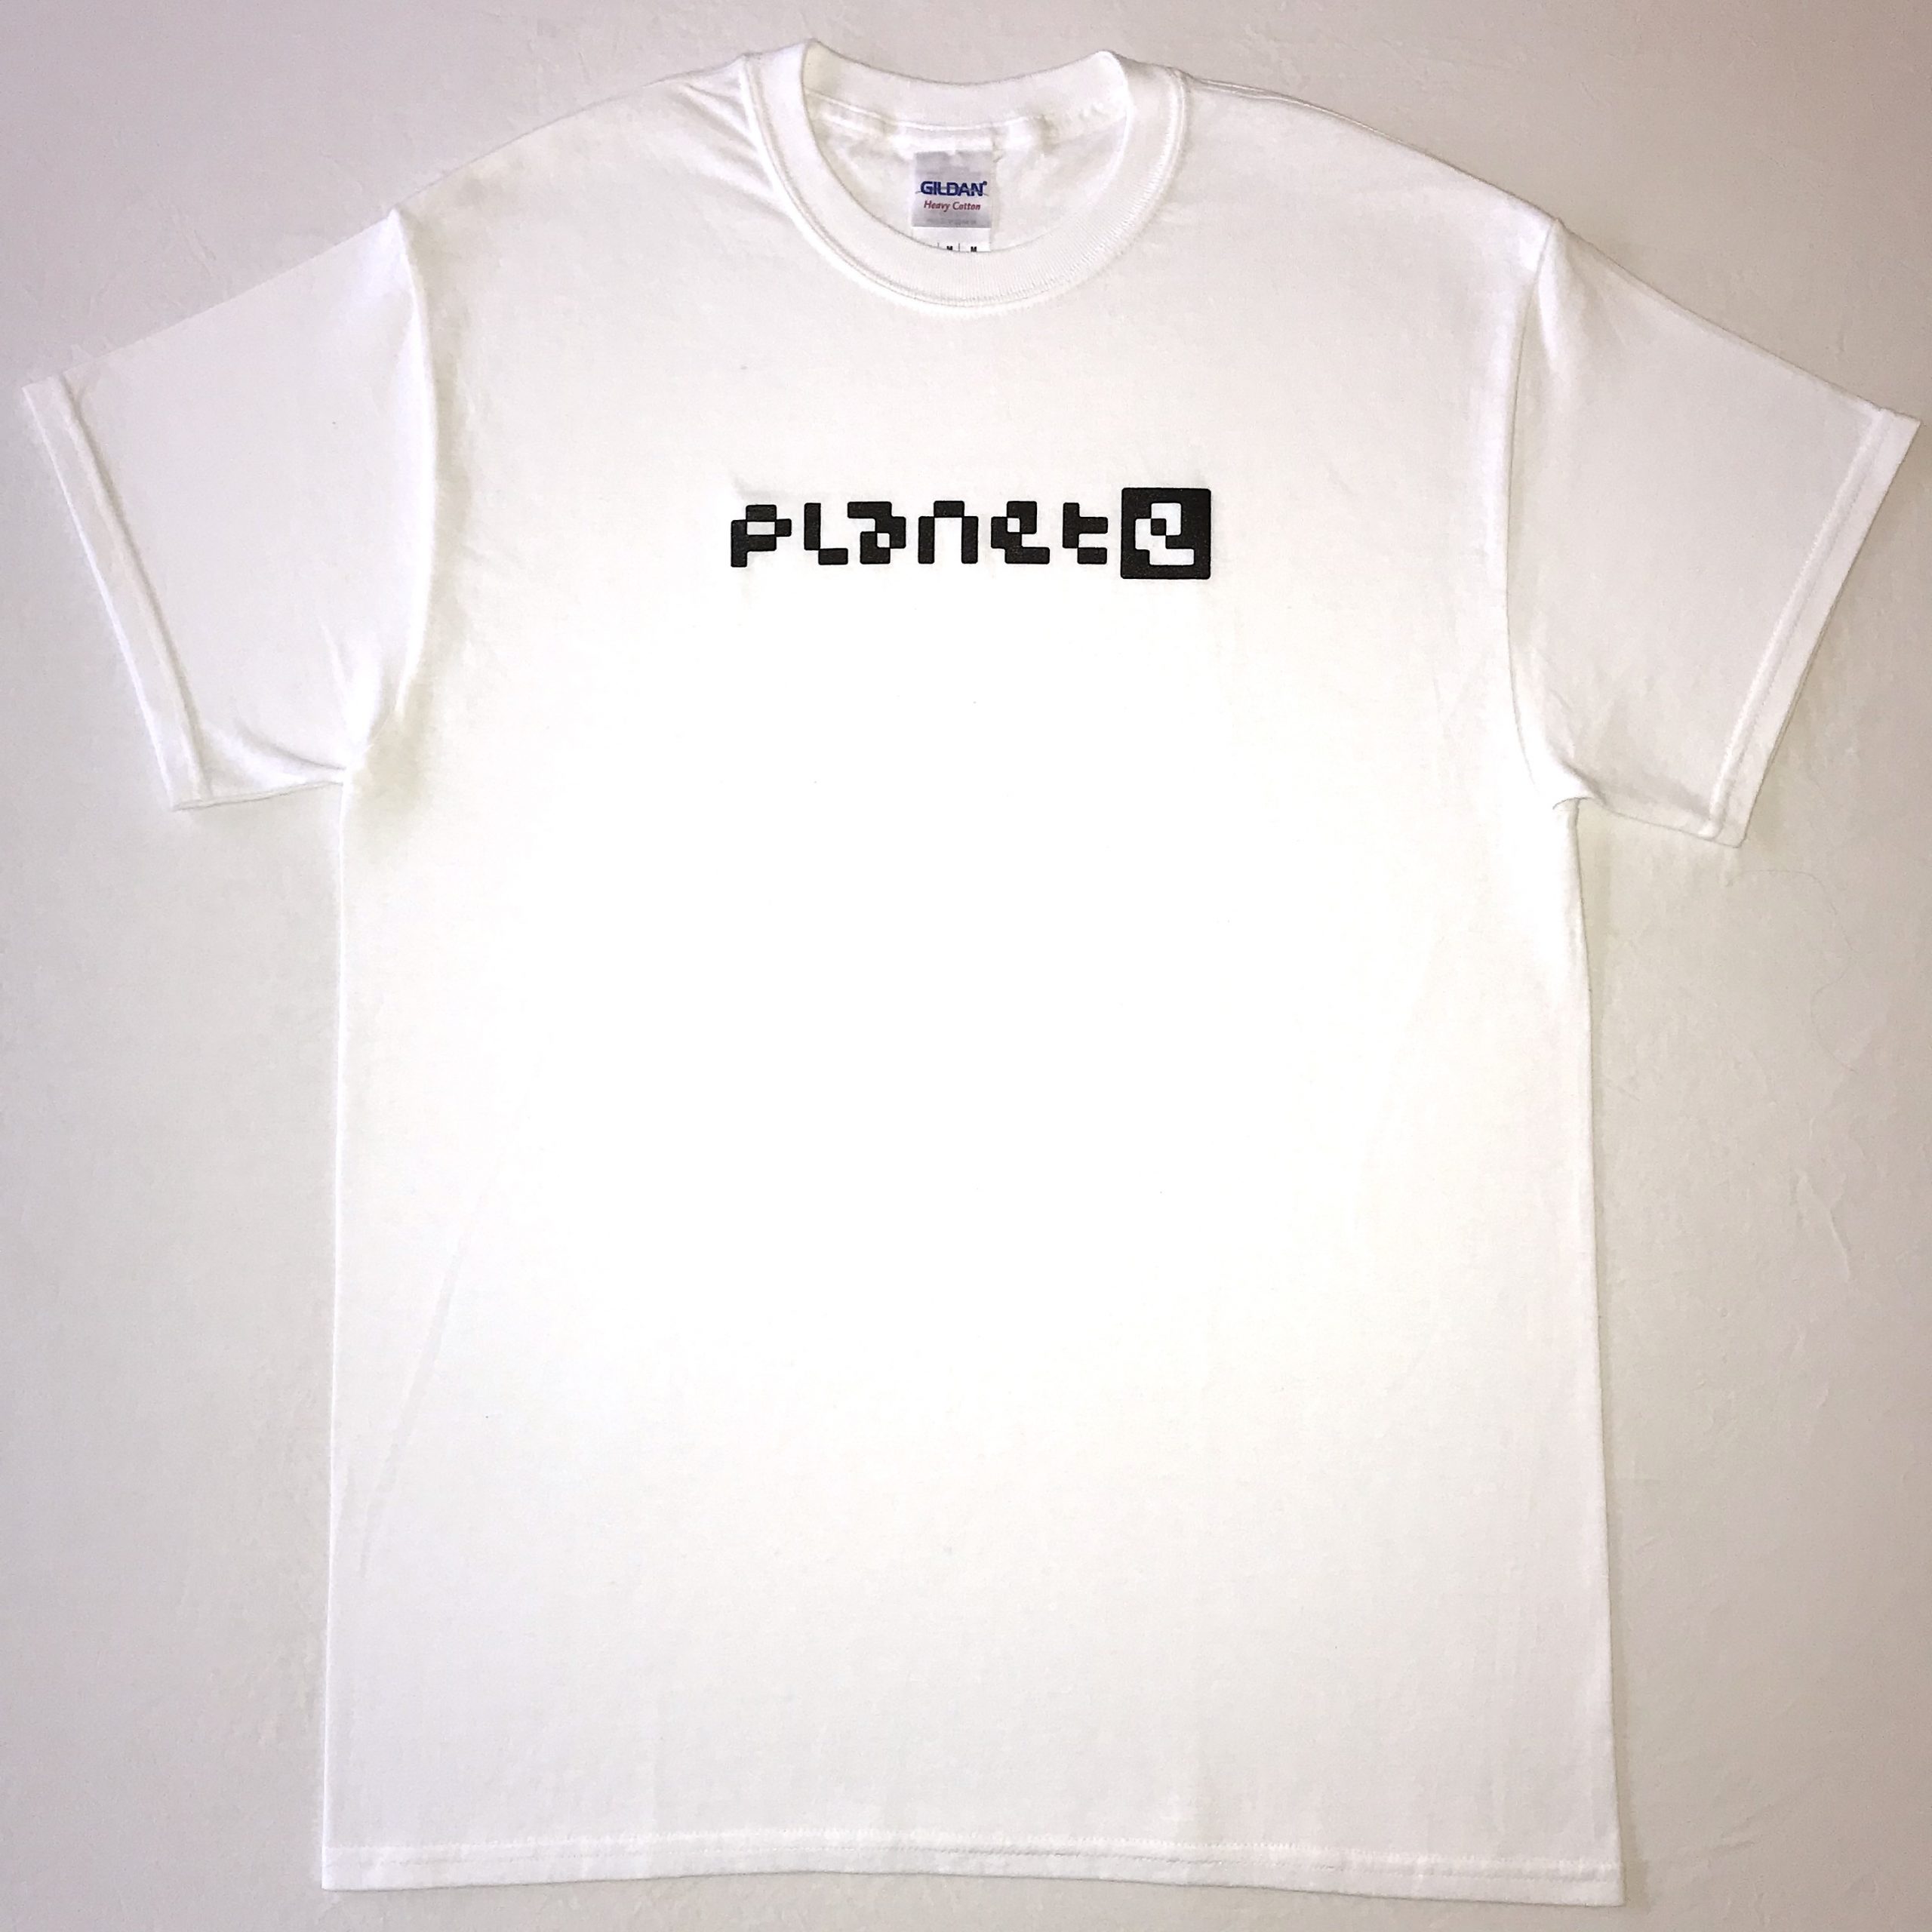 t-shirt white – Planet-e